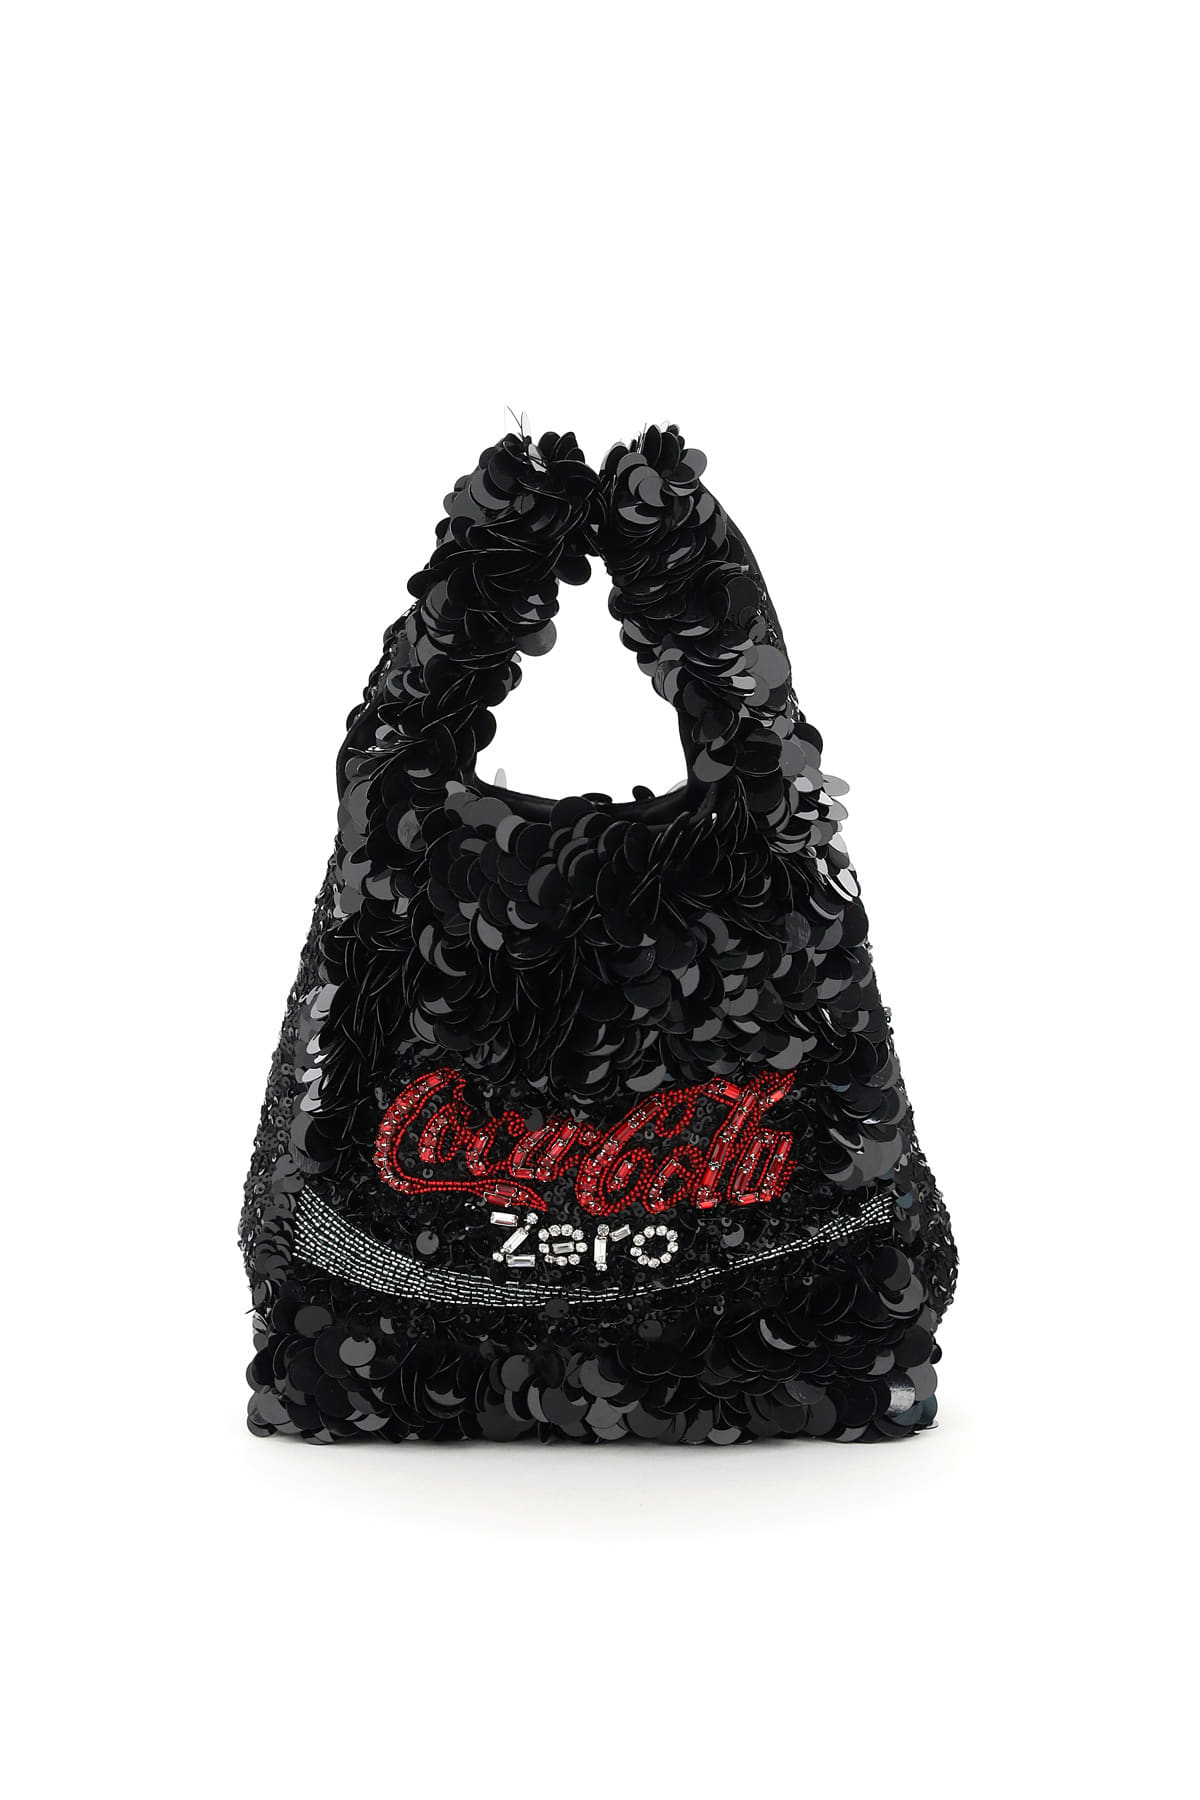 Anya Hindmarch Anya Brands Mini Sequined Tote Coke Zero